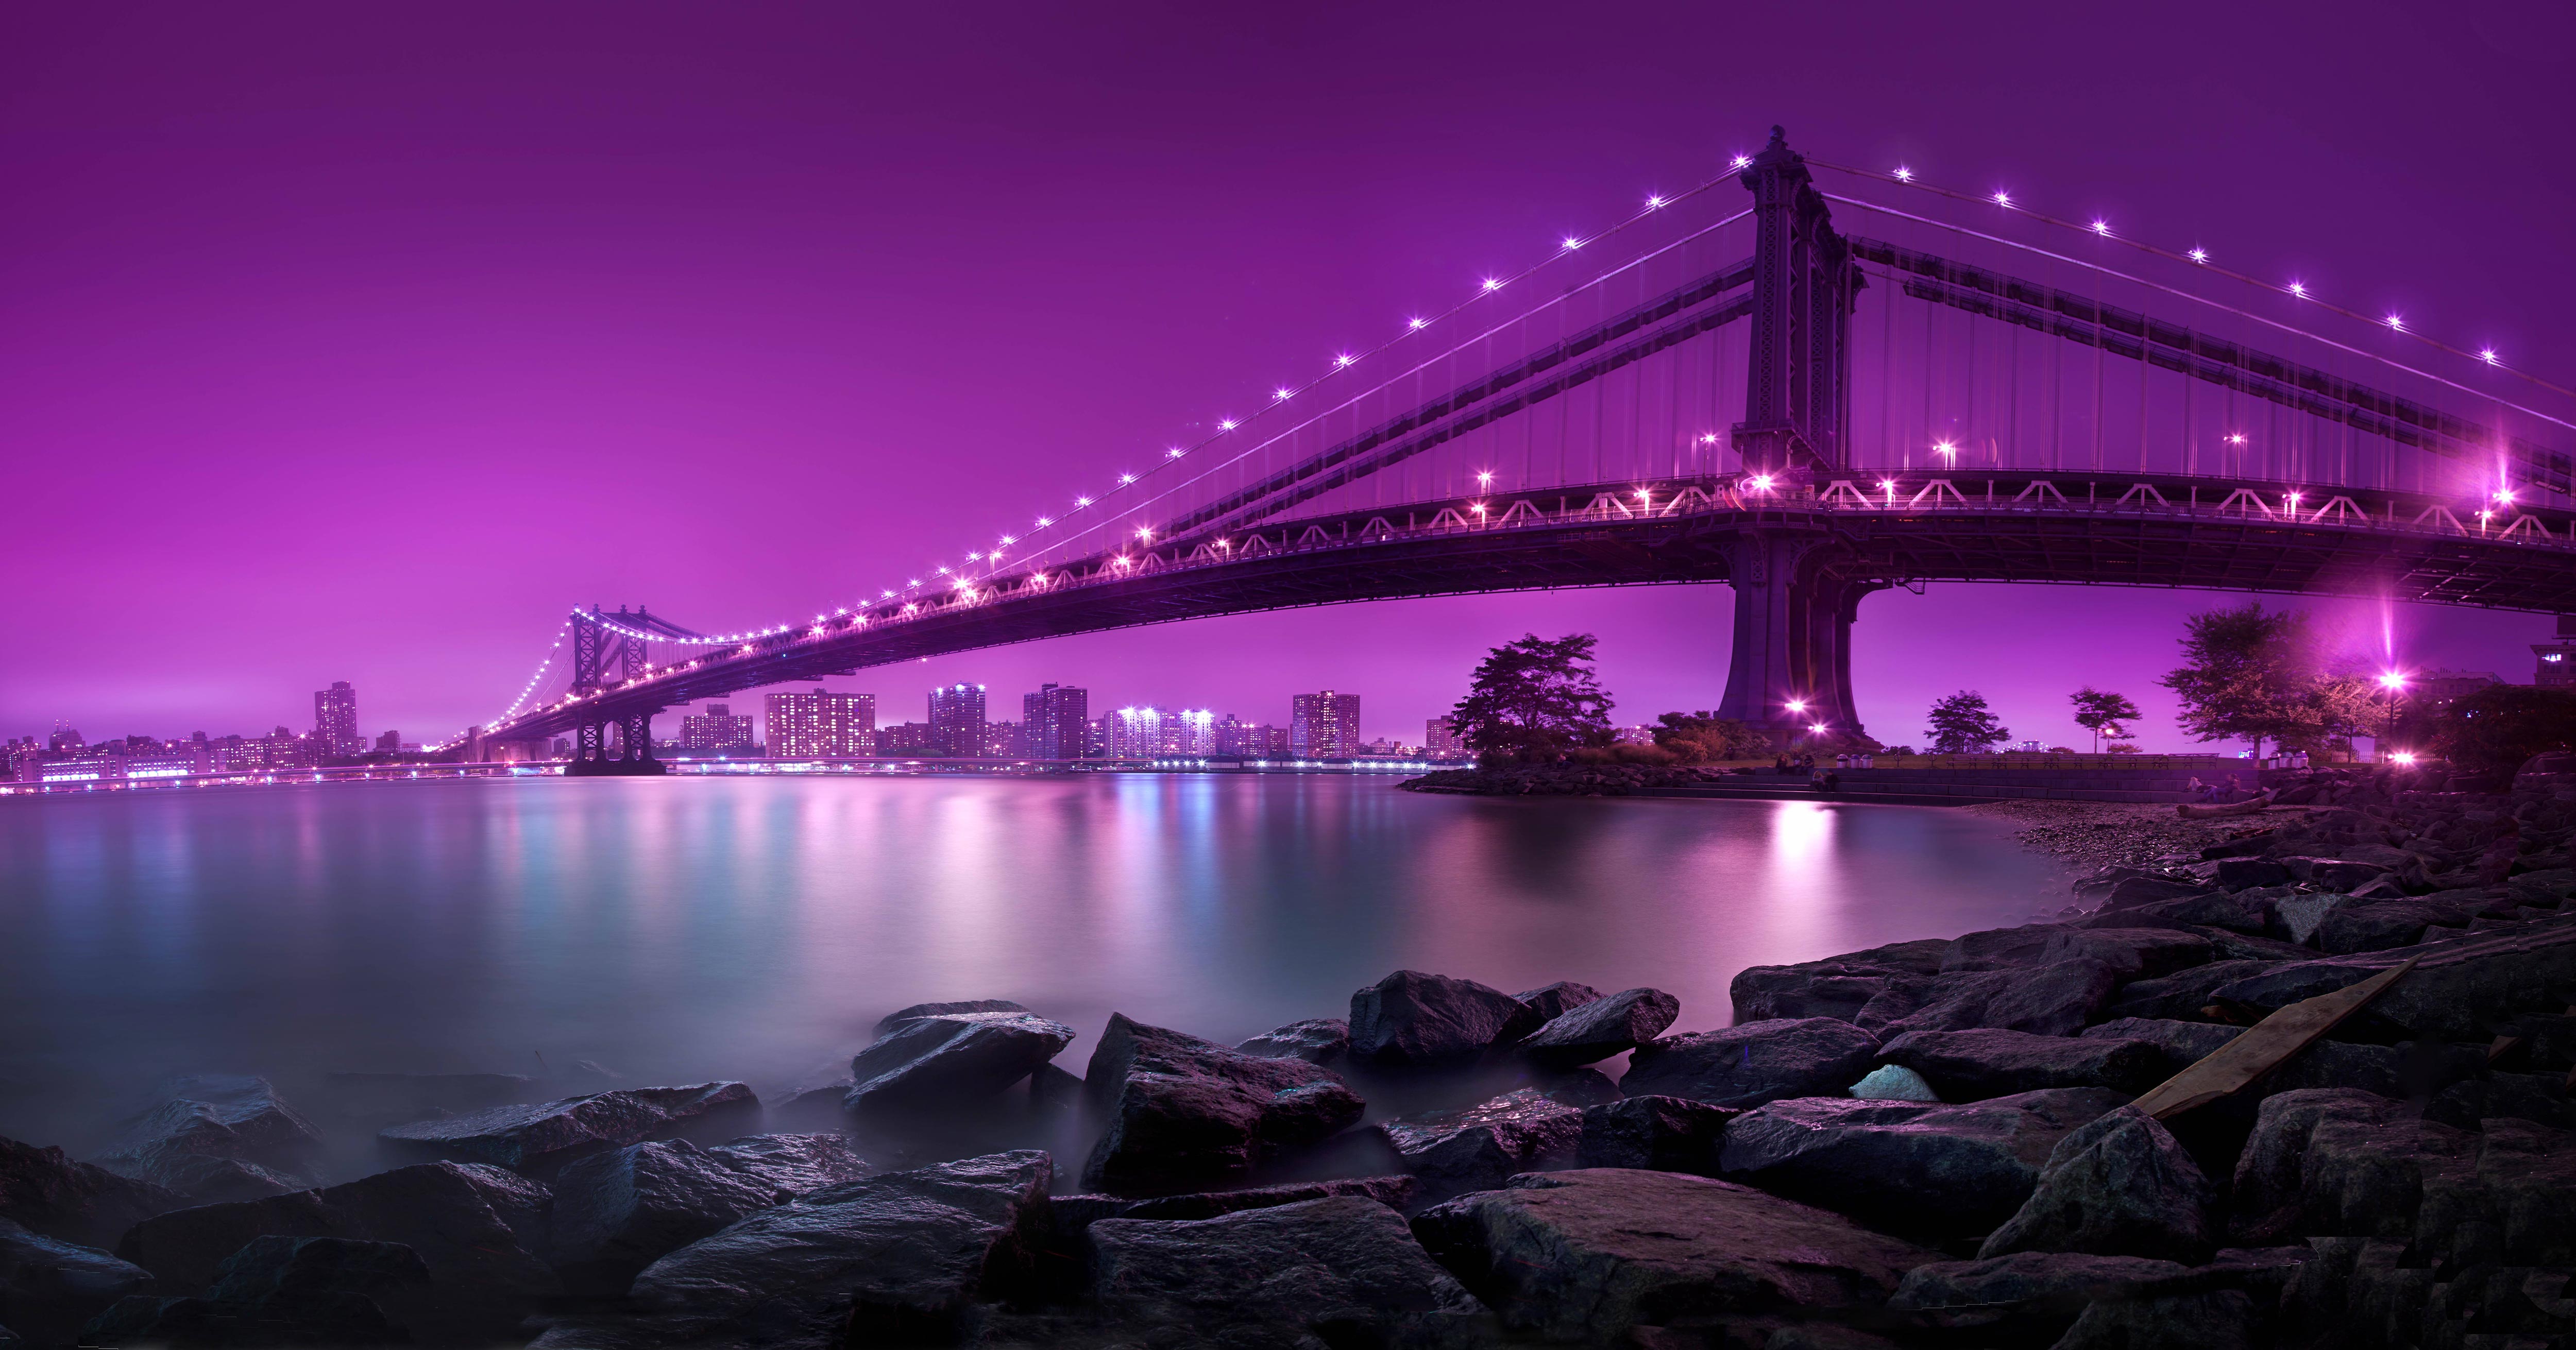 http://www.questus.com.au/app/asset/uploads/2014/11/Wonderful-Purple-Bridge-Wallpaper.jpg